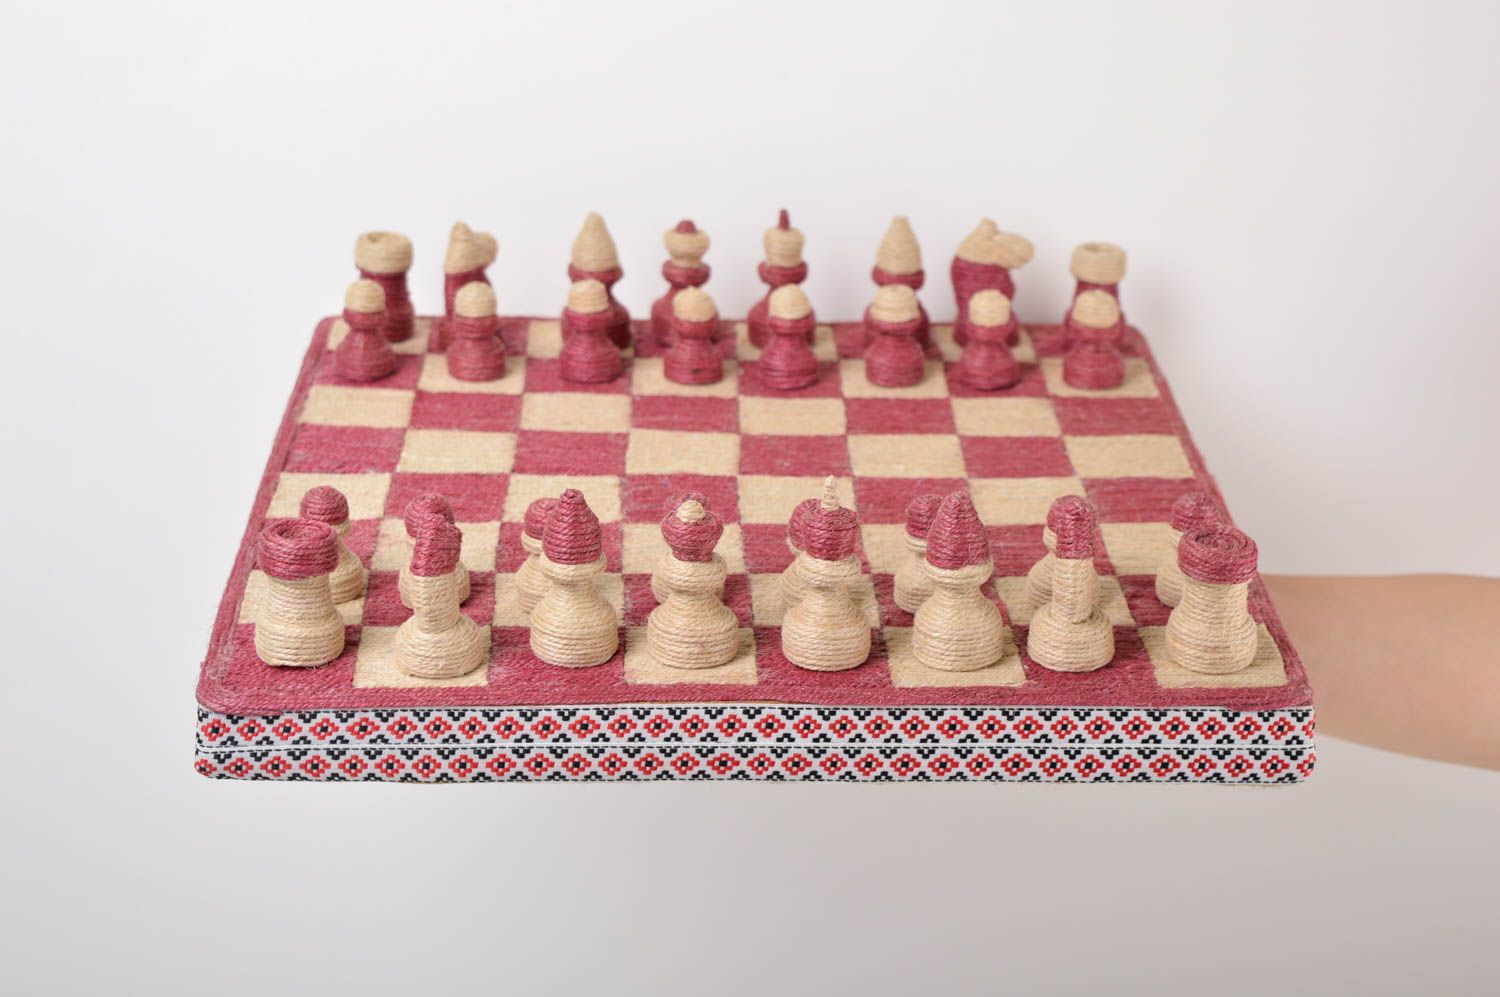 Tabla de ajedrez hecha a mano elemento decorativo regalo original para amigo foto 1